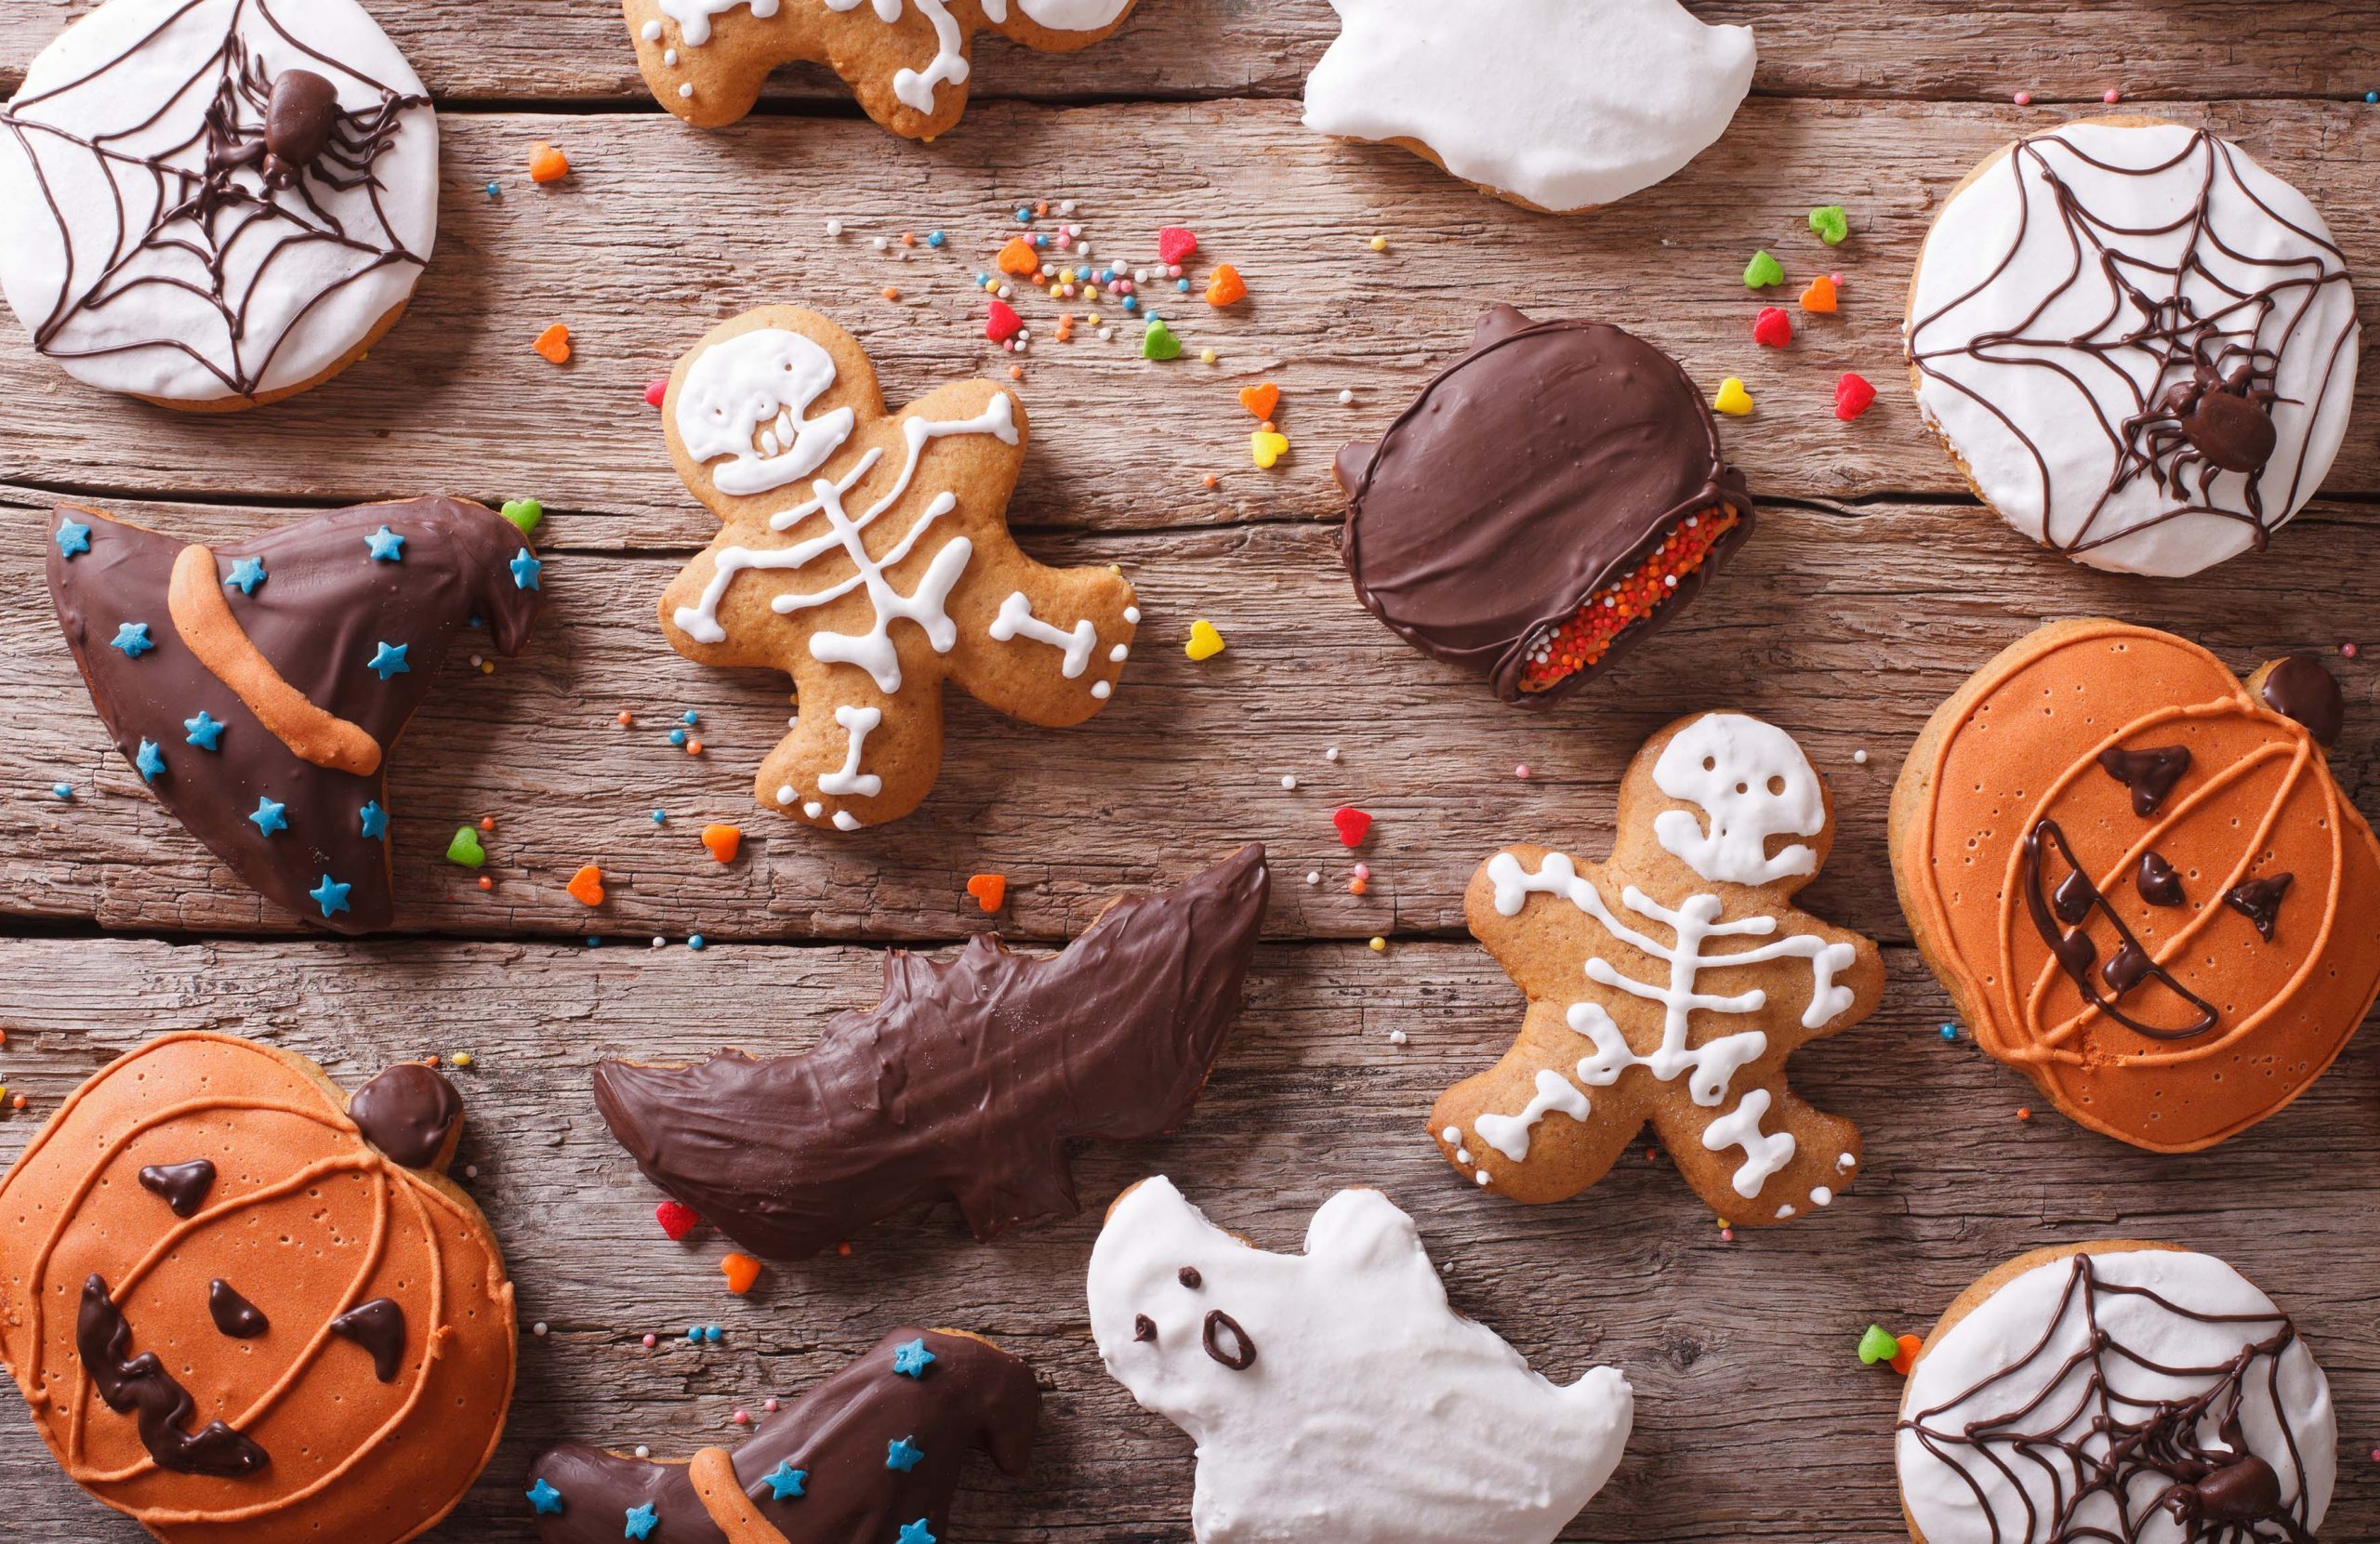 13 Ways to Handle the Halloween Sugar Rush